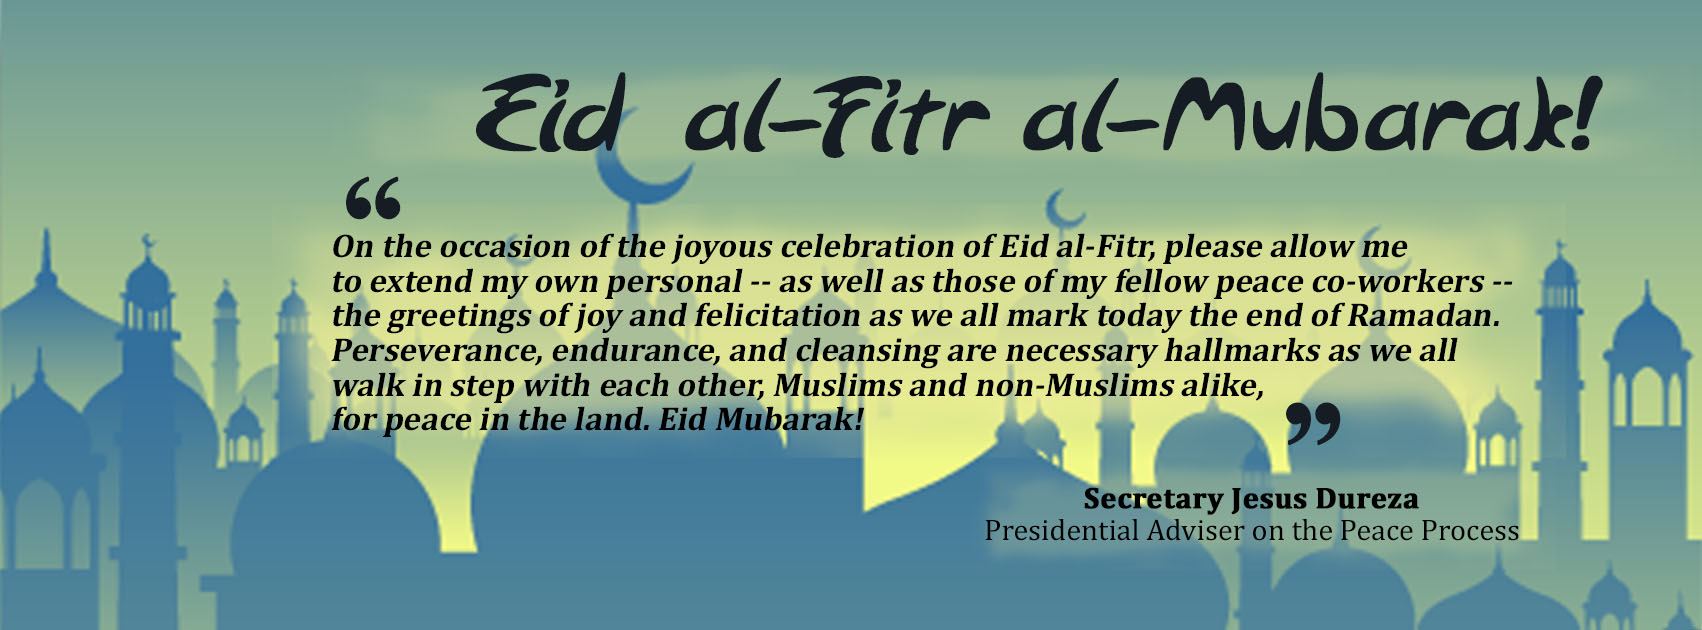 eid-al-fitr